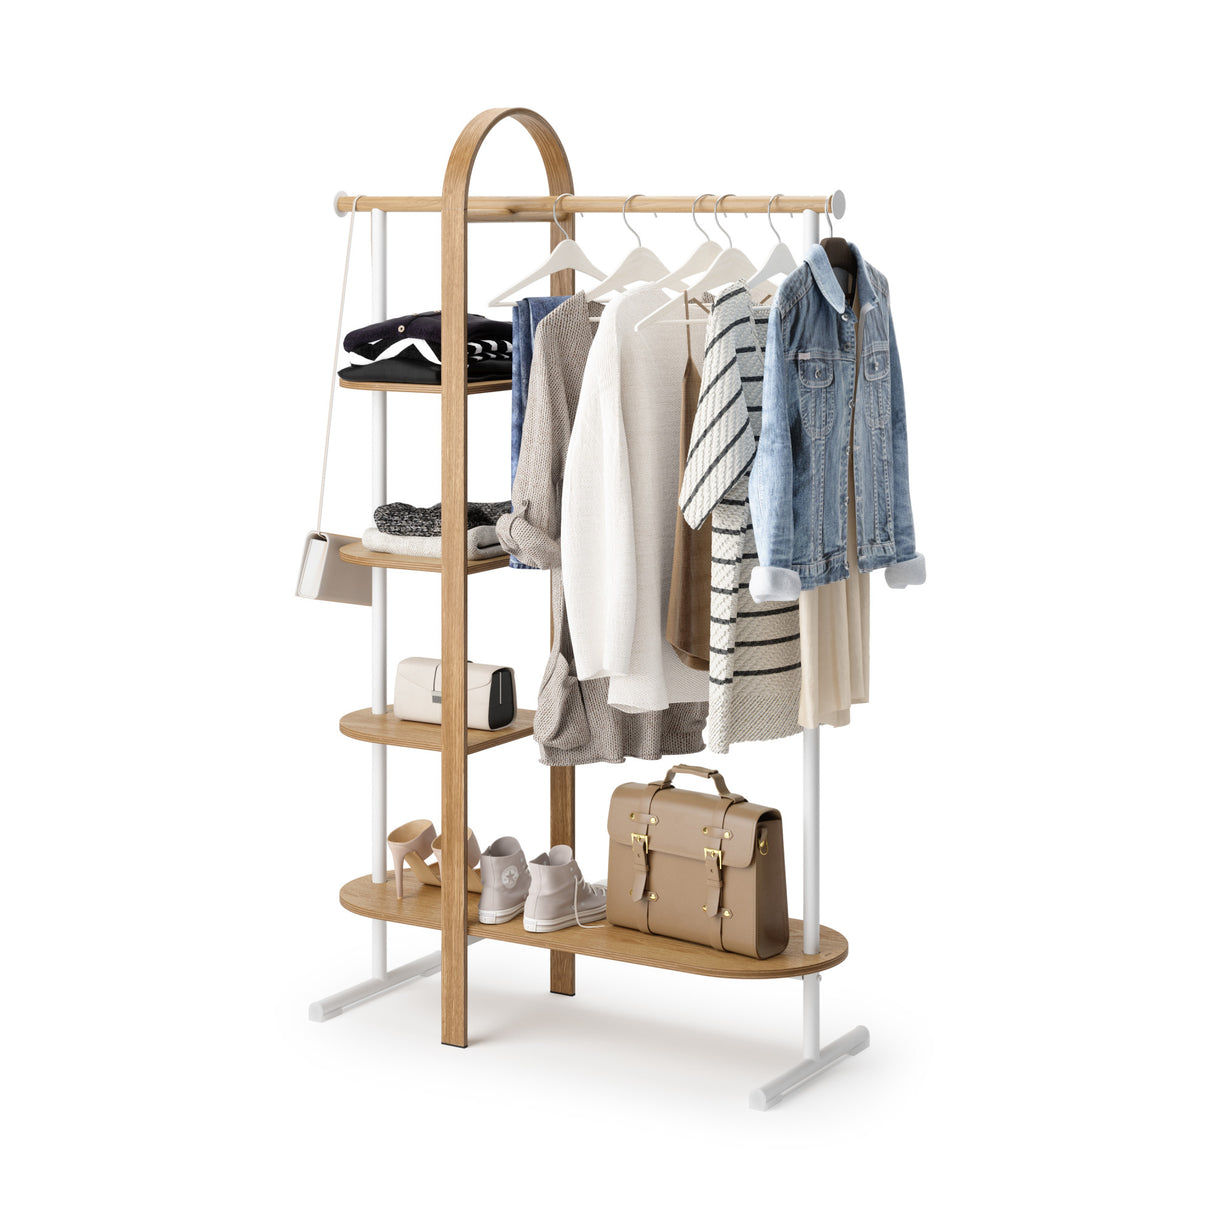 Bellwood Garment Rack, Clothing Storage & Organization